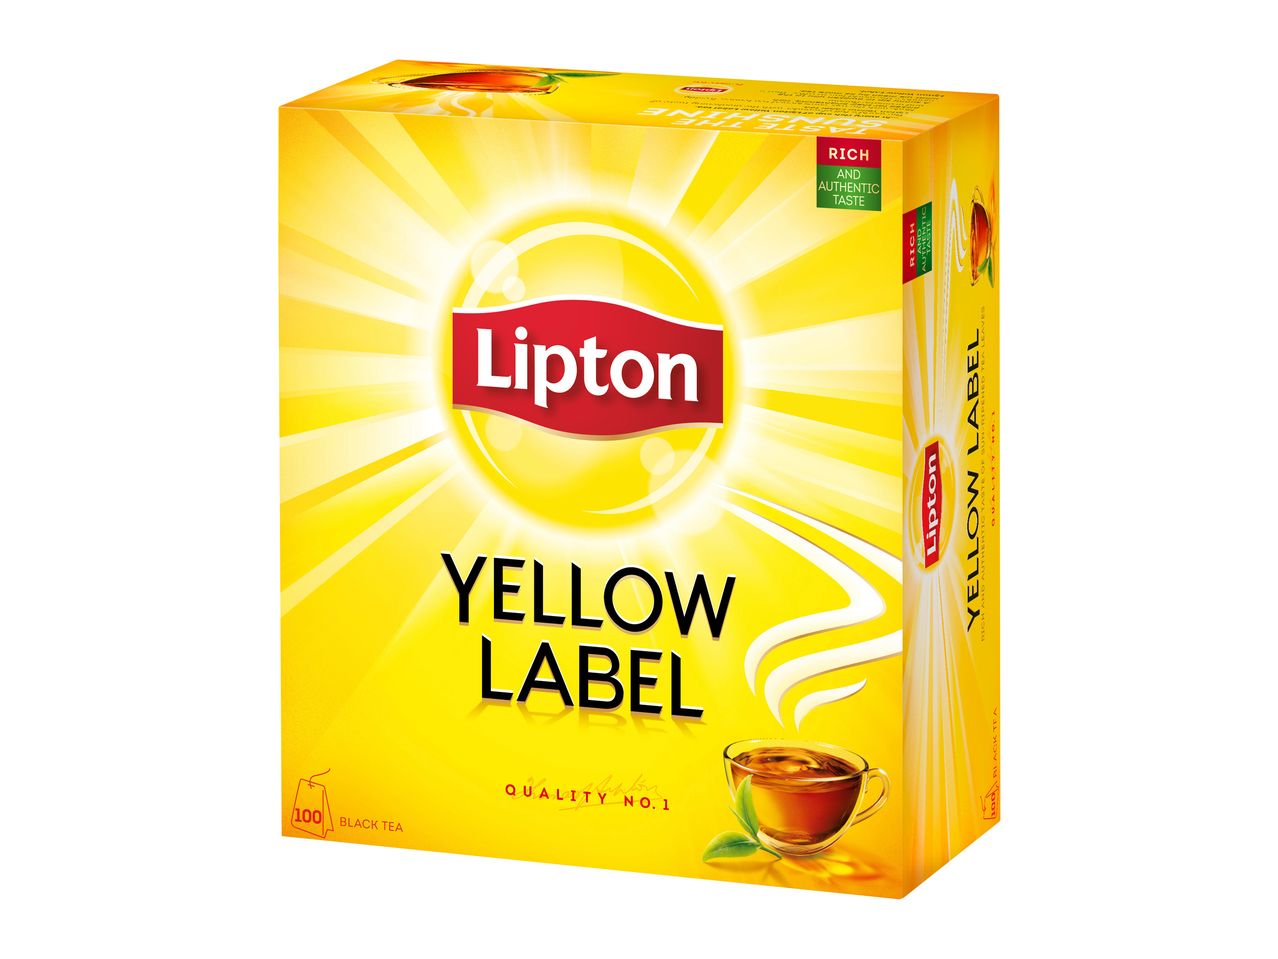 Yellow Label Lipton